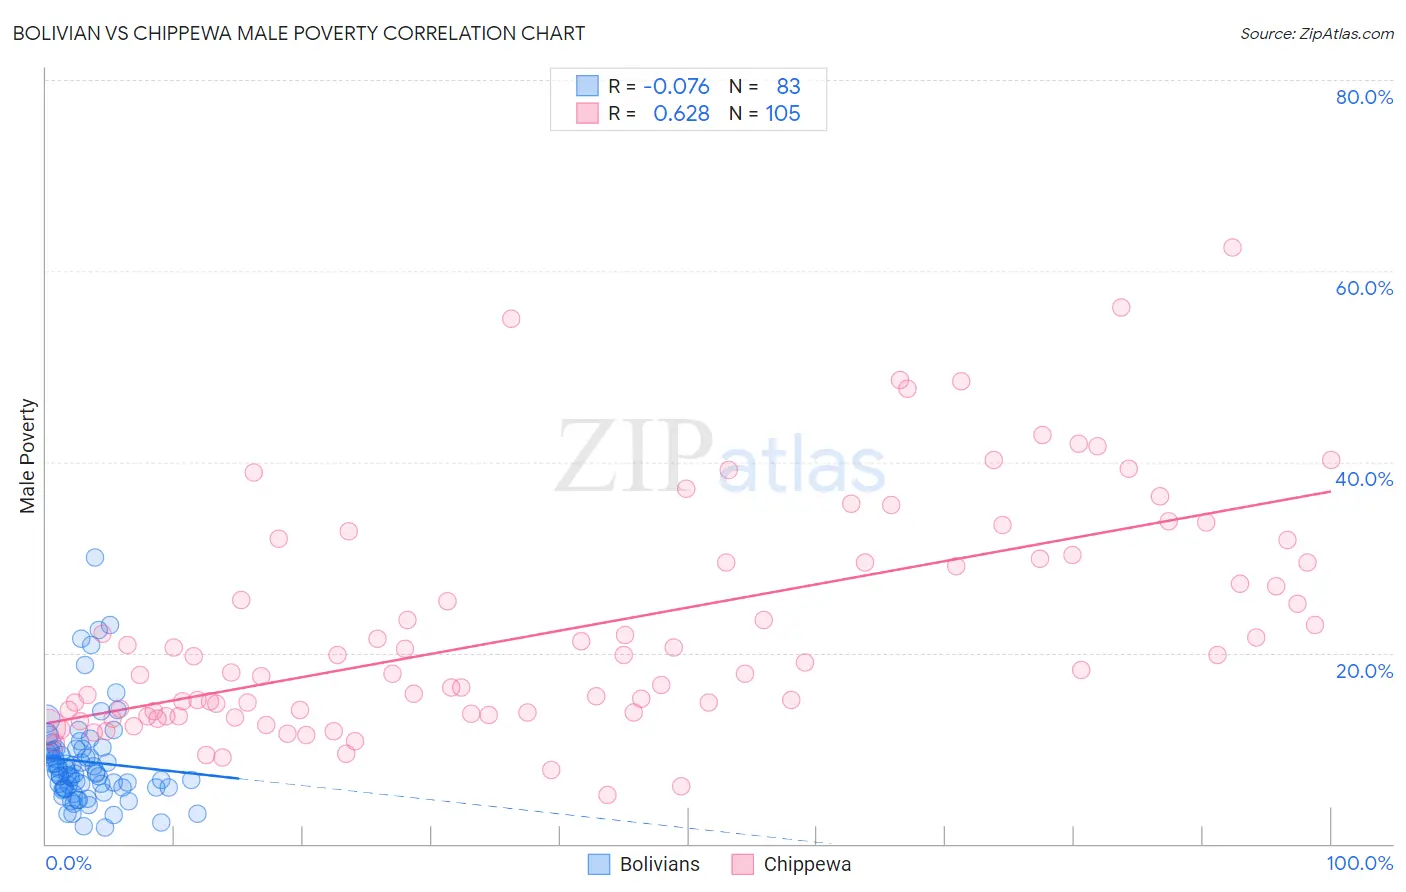 Bolivian vs Chippewa Male Poverty